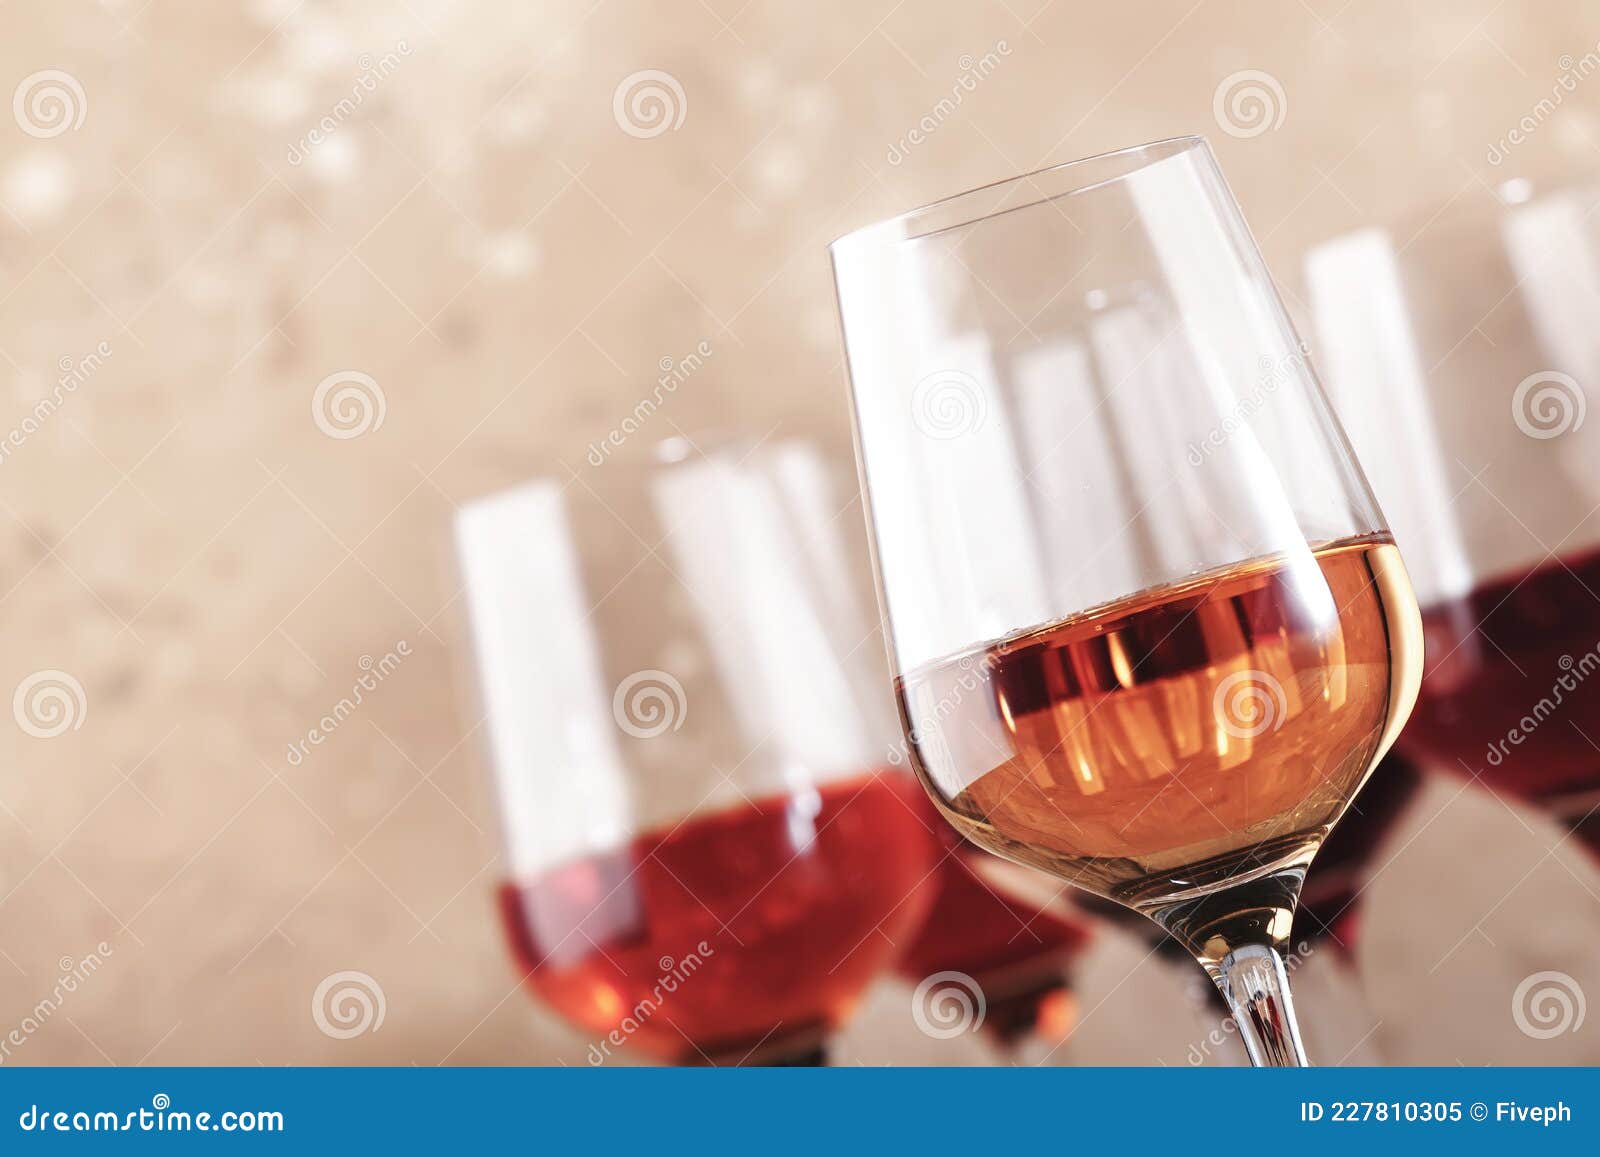 rose wine glasses on the beige table. rosado, rosato or blush wine tasting concept, negative space